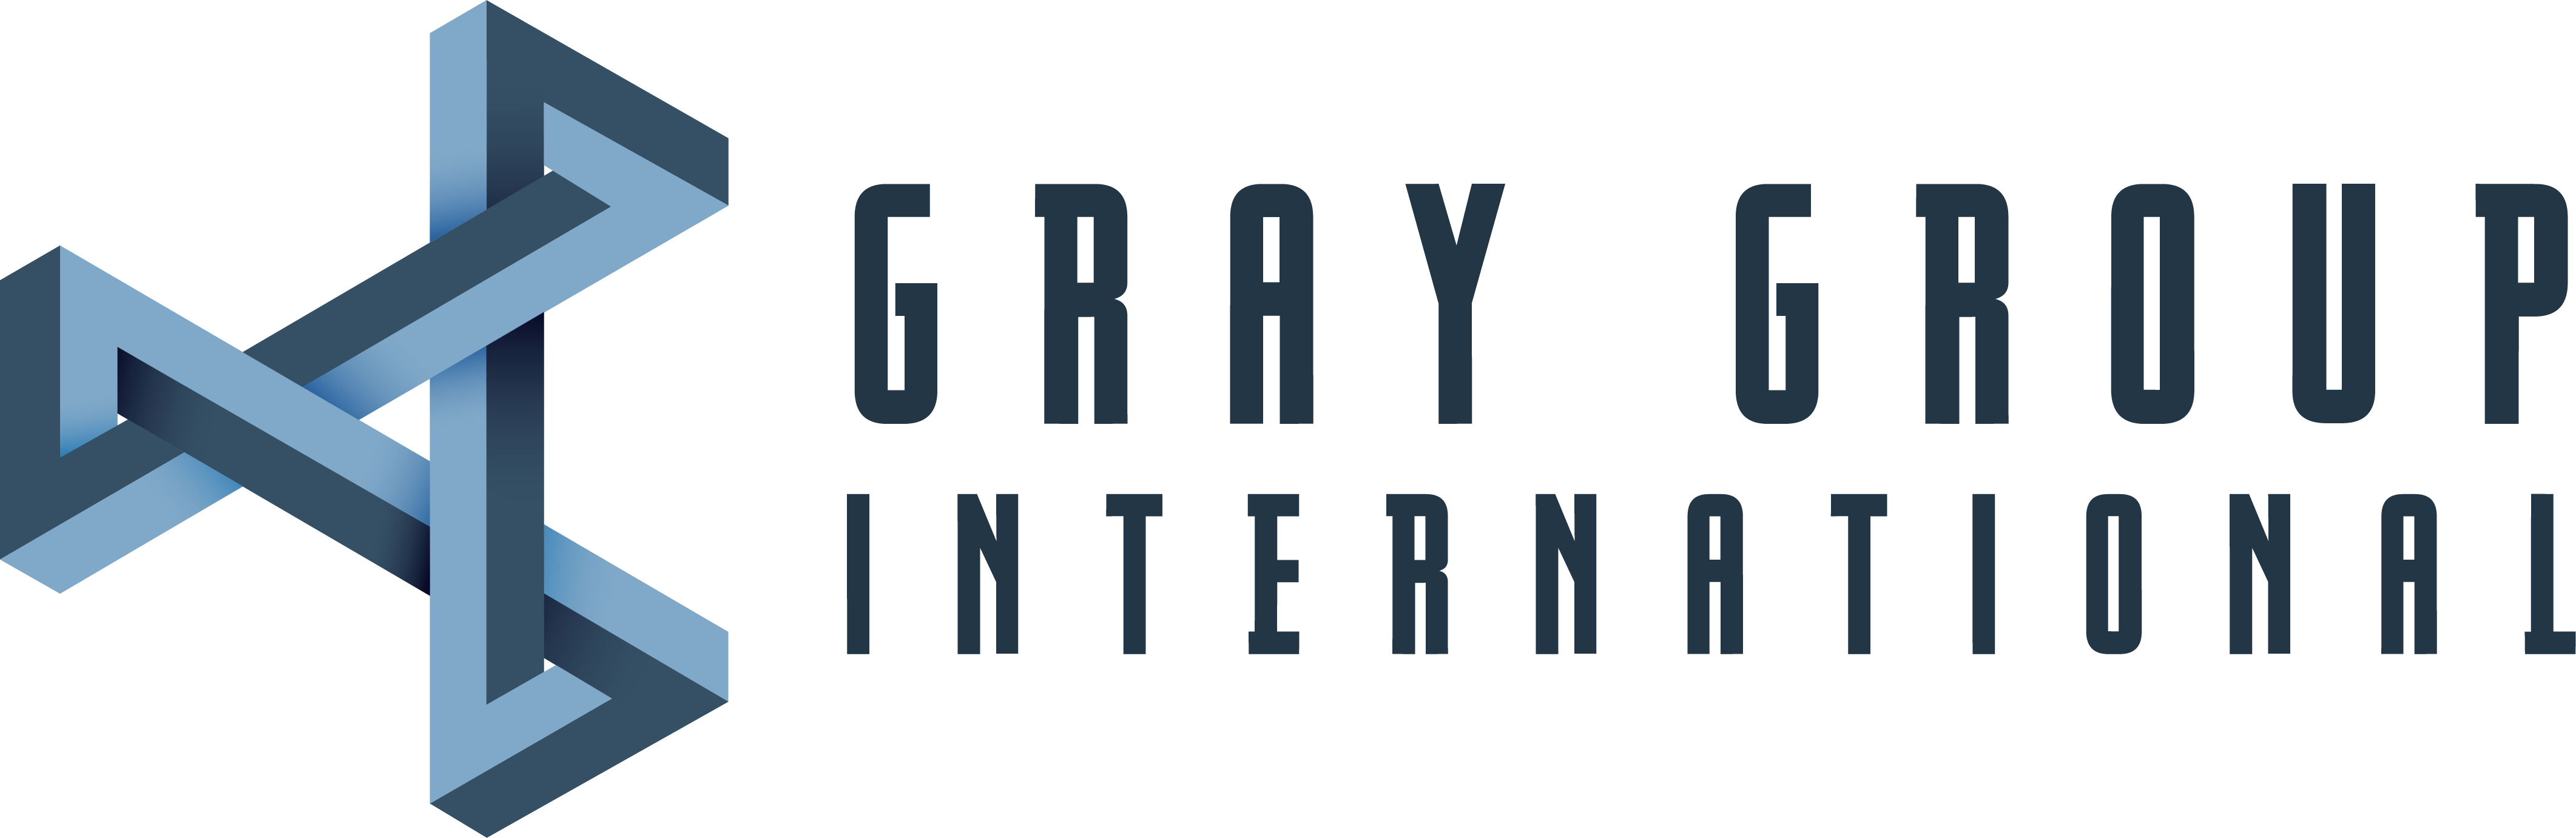 ggi logo email